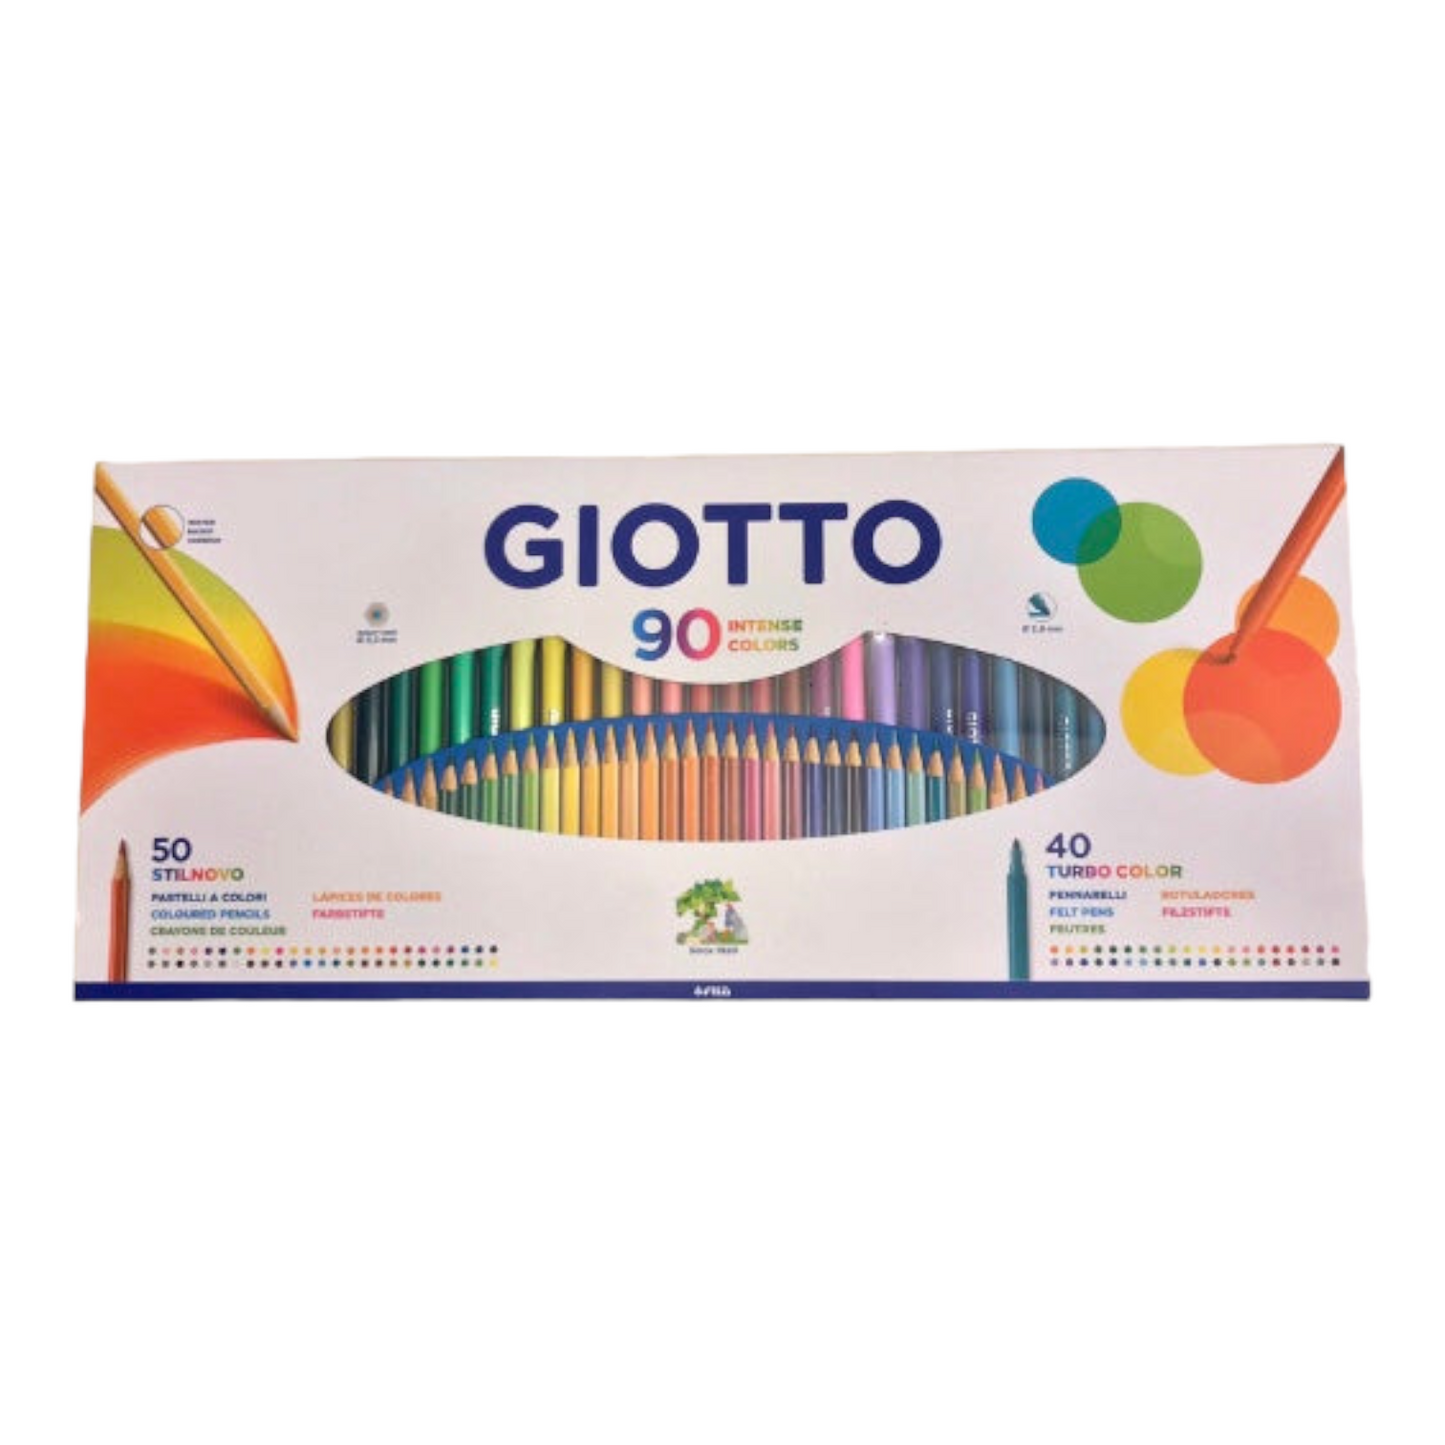 Giotto - 90 intense colors